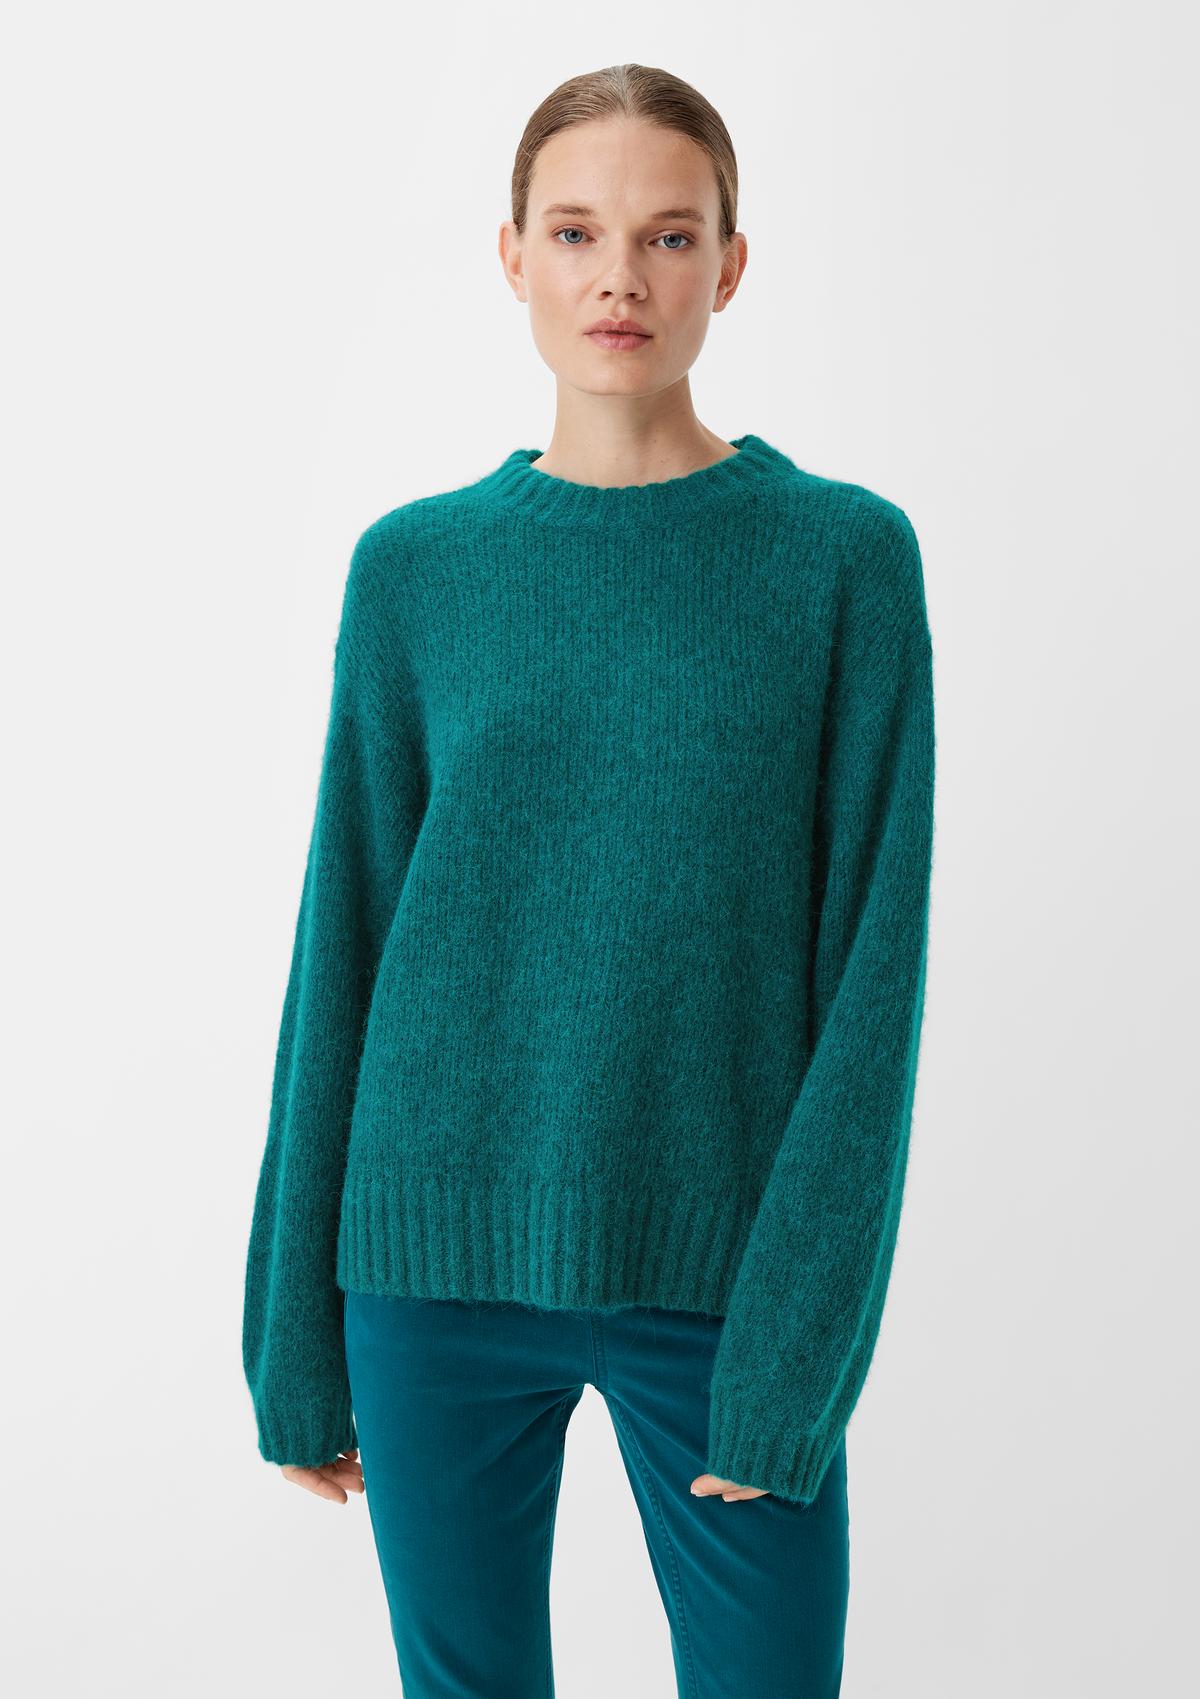 Knitted jumper in an alpaca blend